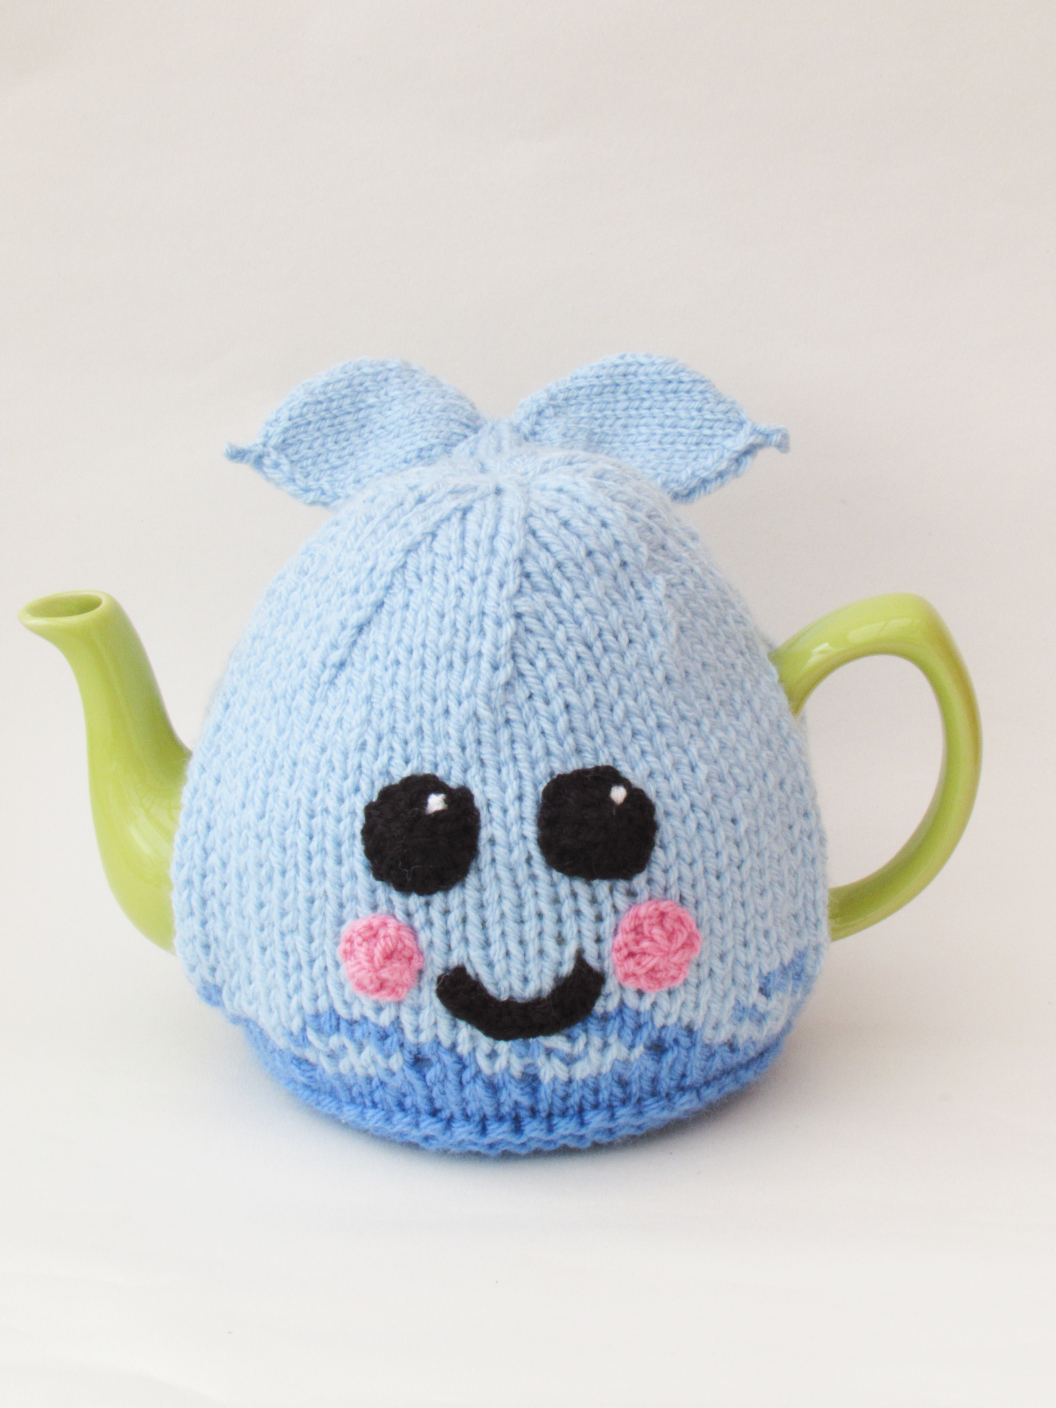 Hedgehog Mushroom Tea Cozy pattern Knitting Crochet pattern by T